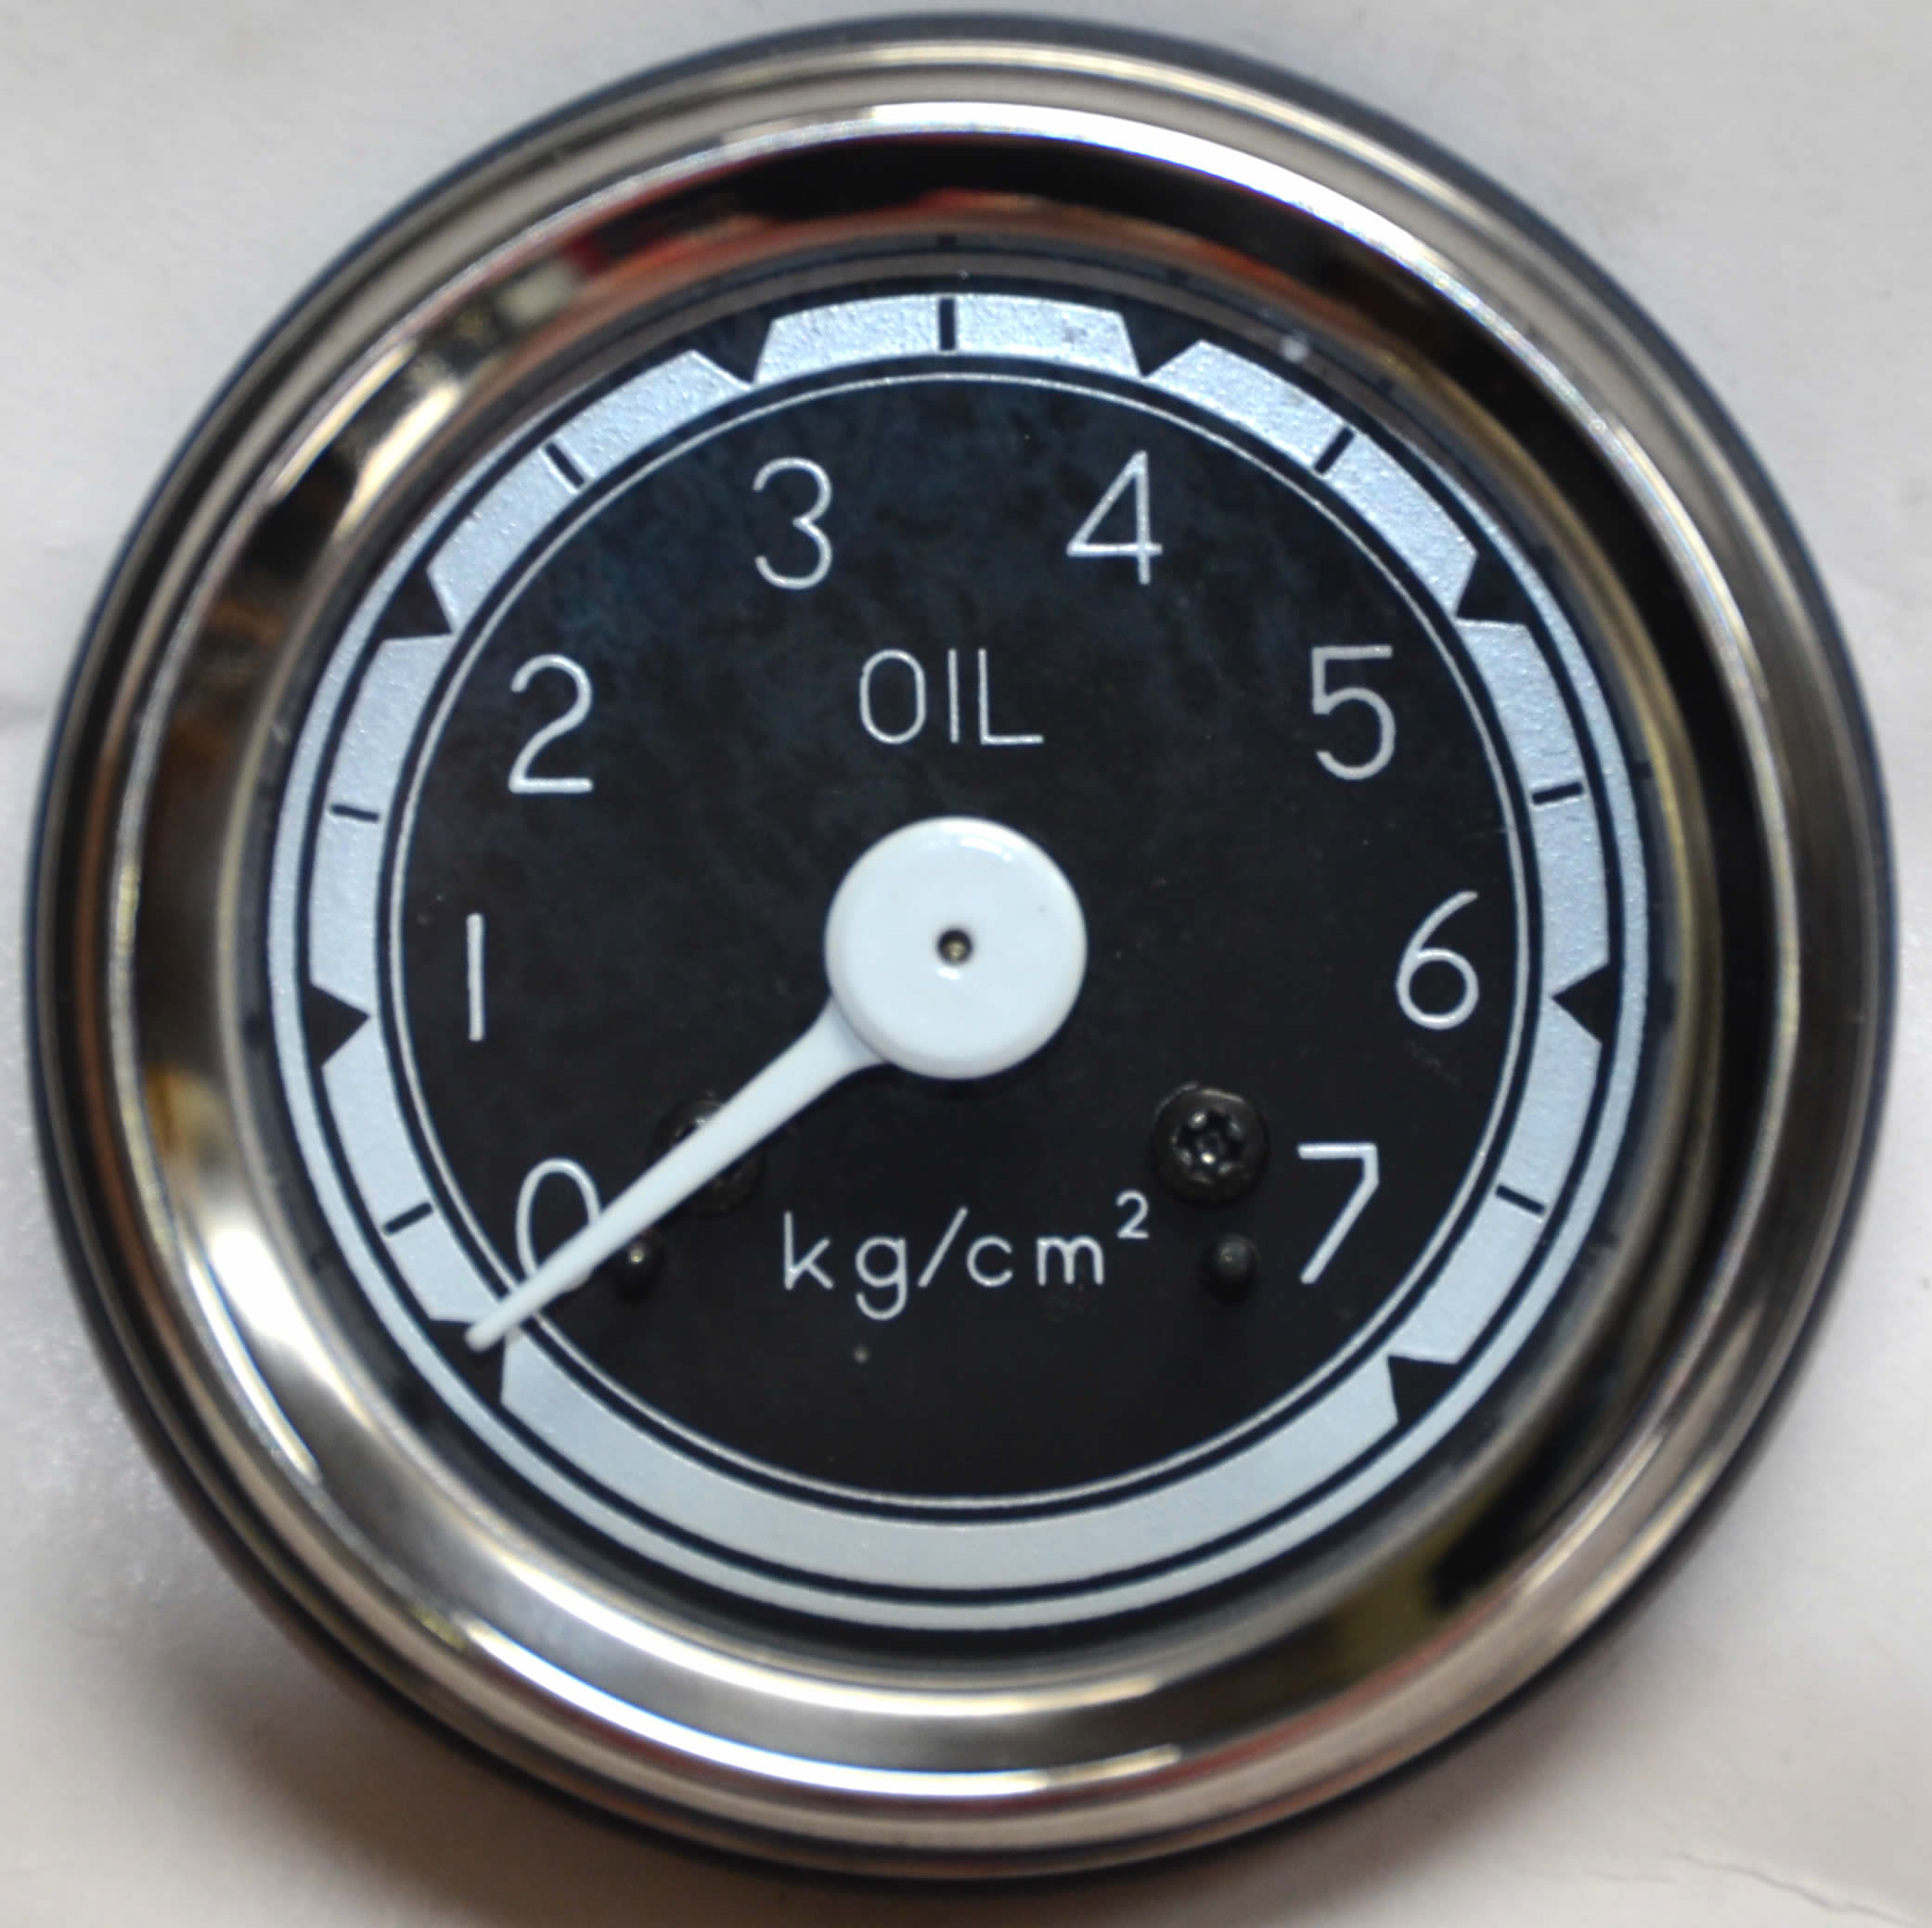  0-533-16 - Öldruckmessgerät, 52 mm, mechanisch, mit